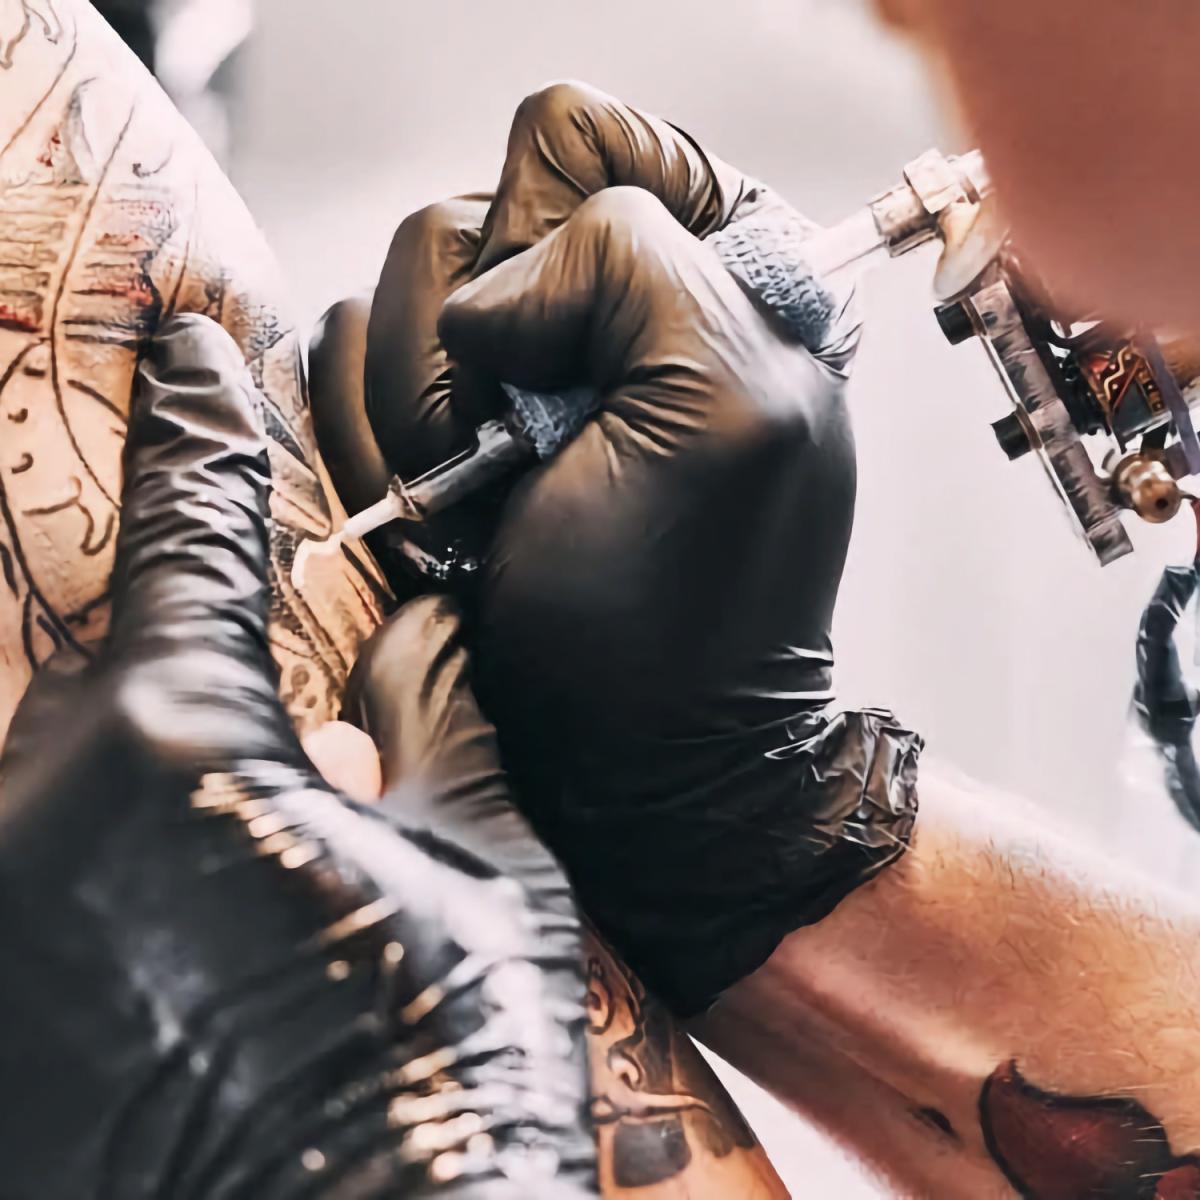 Video. International Tattoo Convention returns to Amsterdam | Euronews